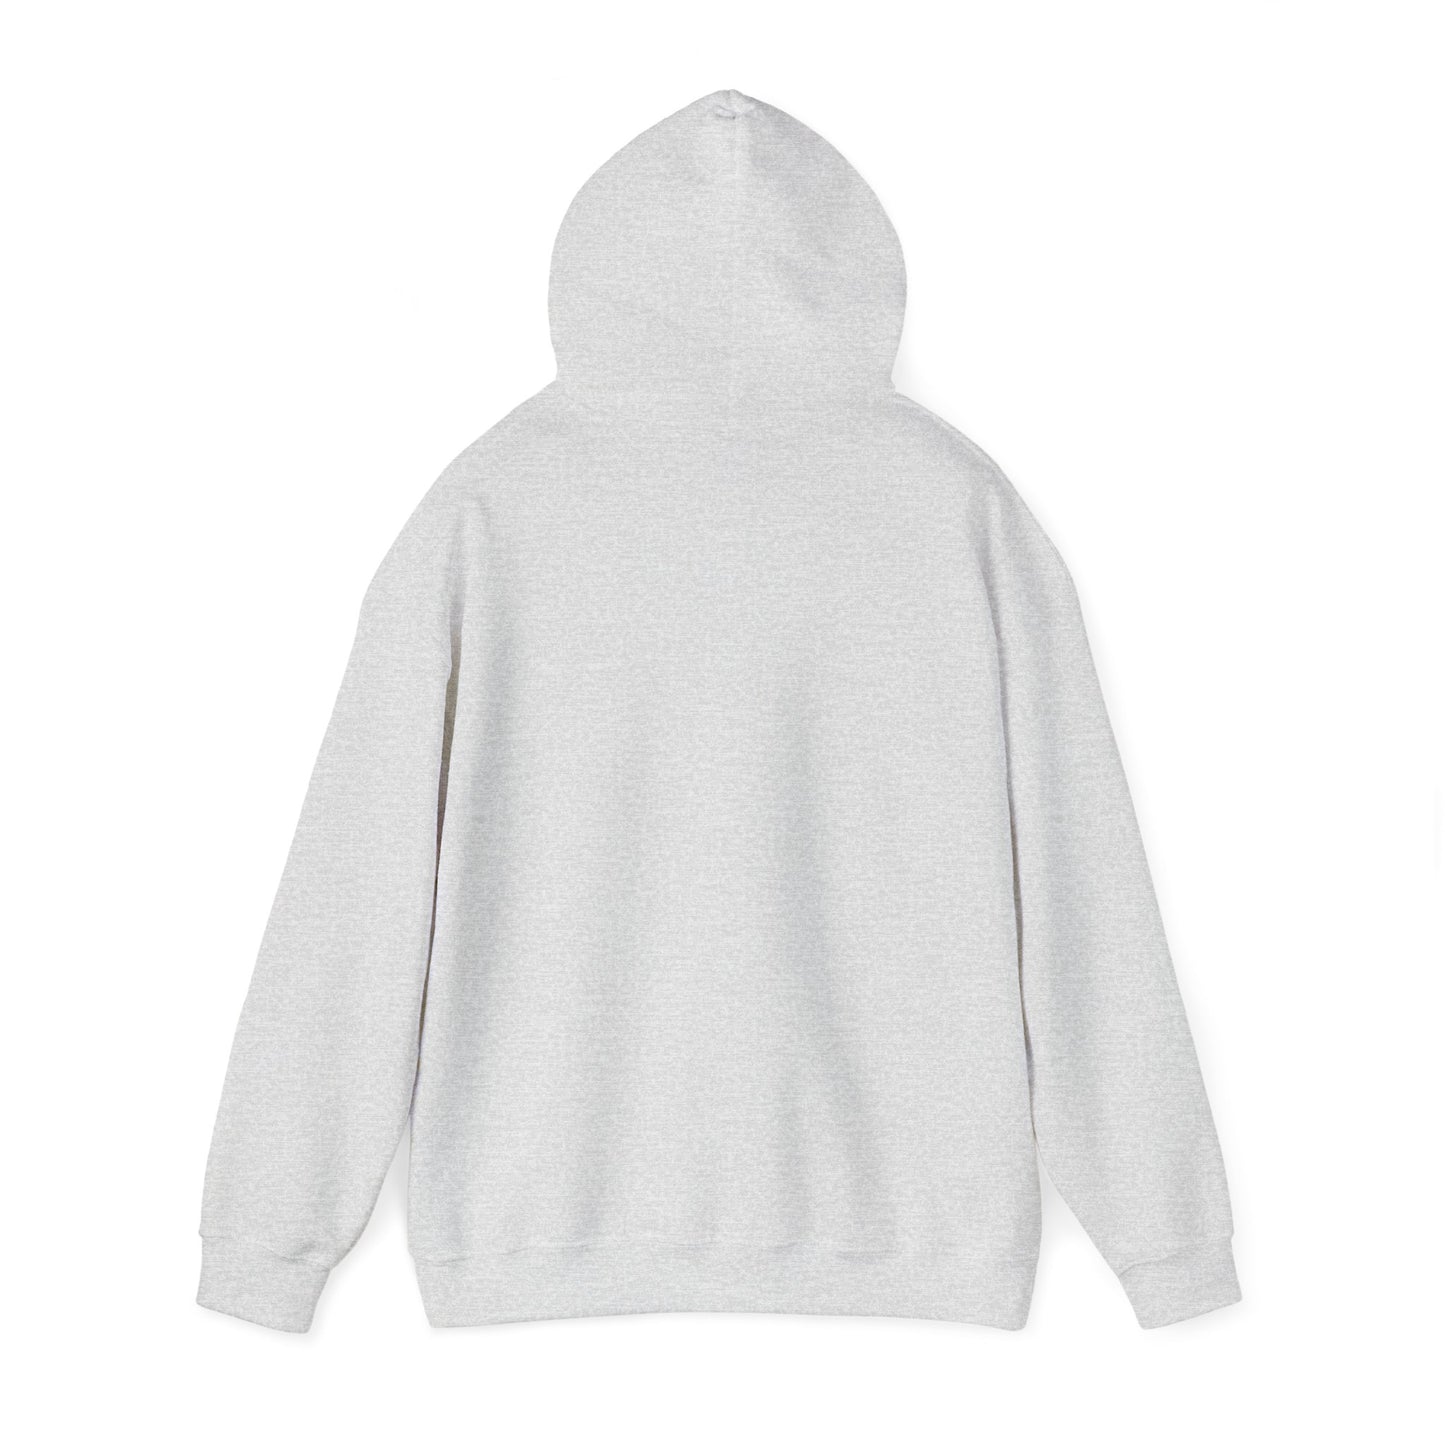 Ga CannaSense -Unisex Heavy Blend™ Hooded Sweatshirt-